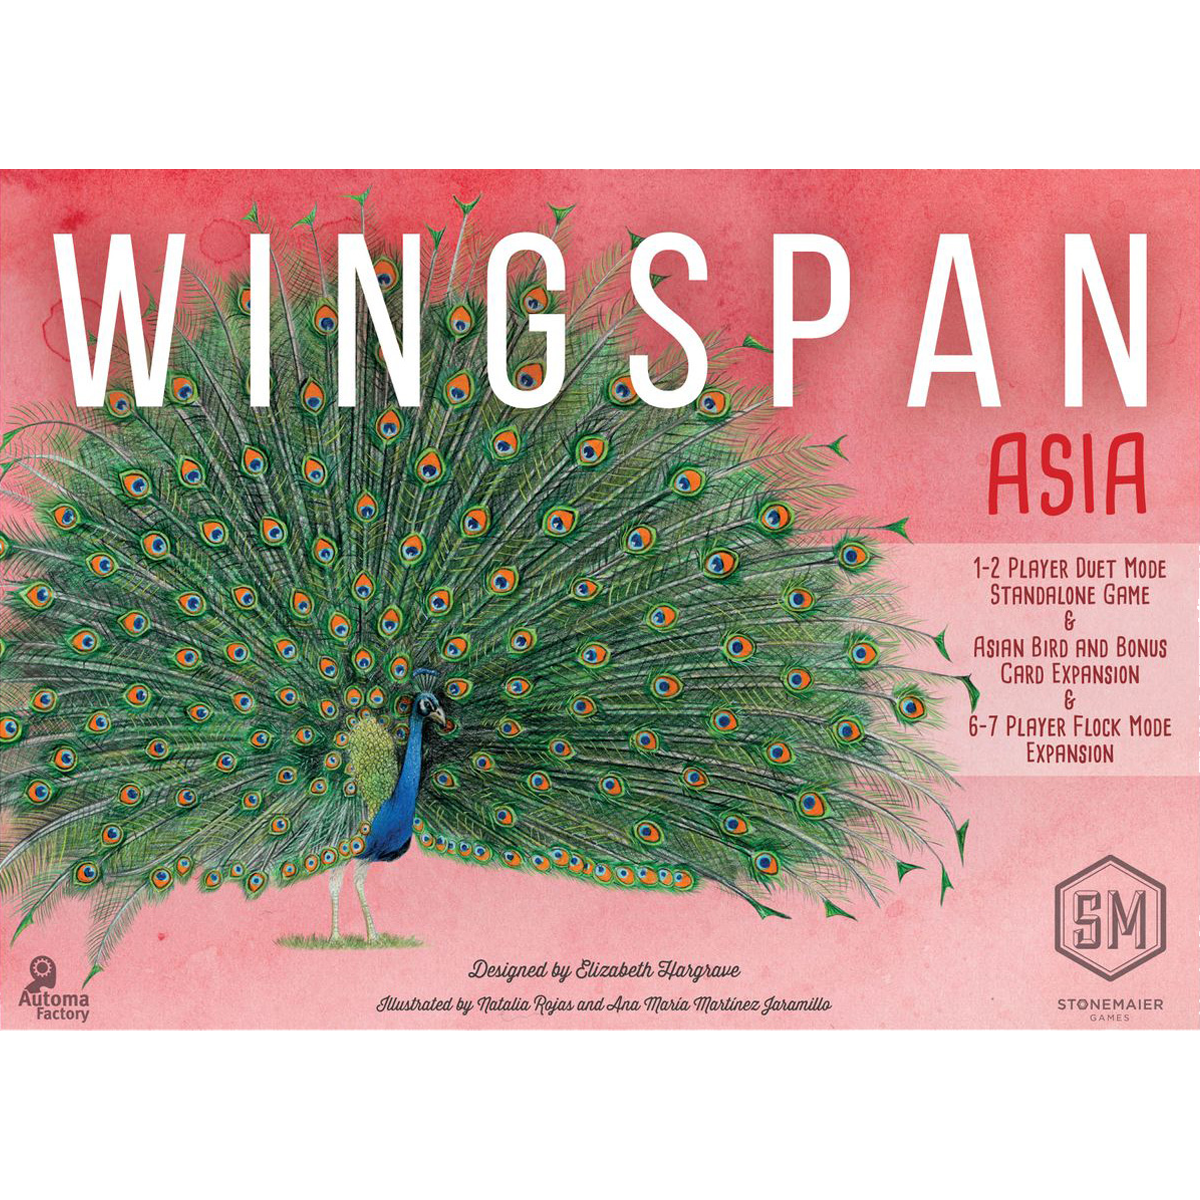 Asia expansion. Wingspan score shit.